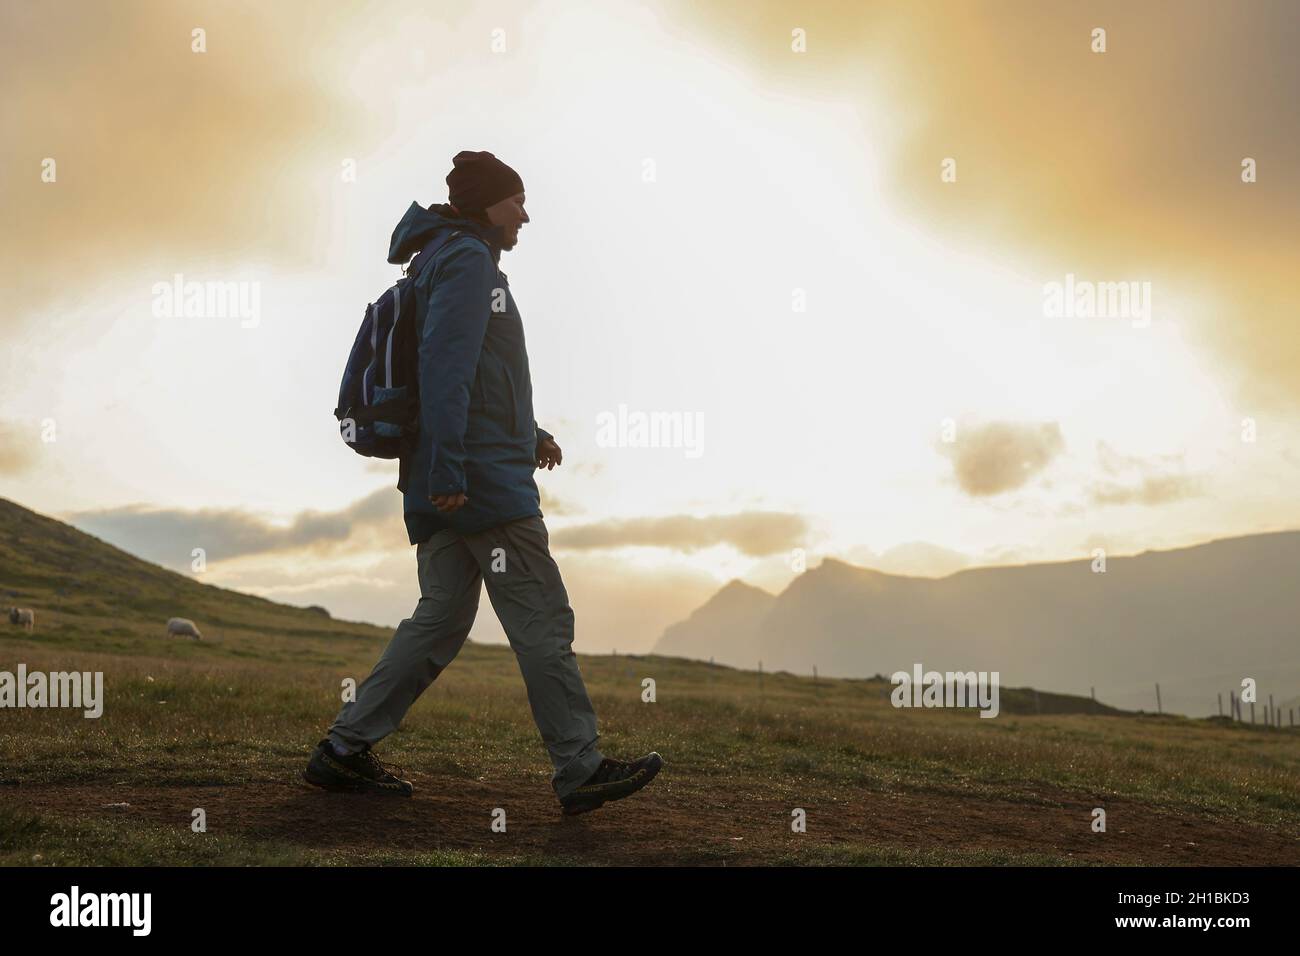 Silhouette eines Wanderers am Morgen auf dem Slaetteratindur Berg, Eysturoy Insel, Färöer Inseln, Skandinavien, Europa. Stockfoto